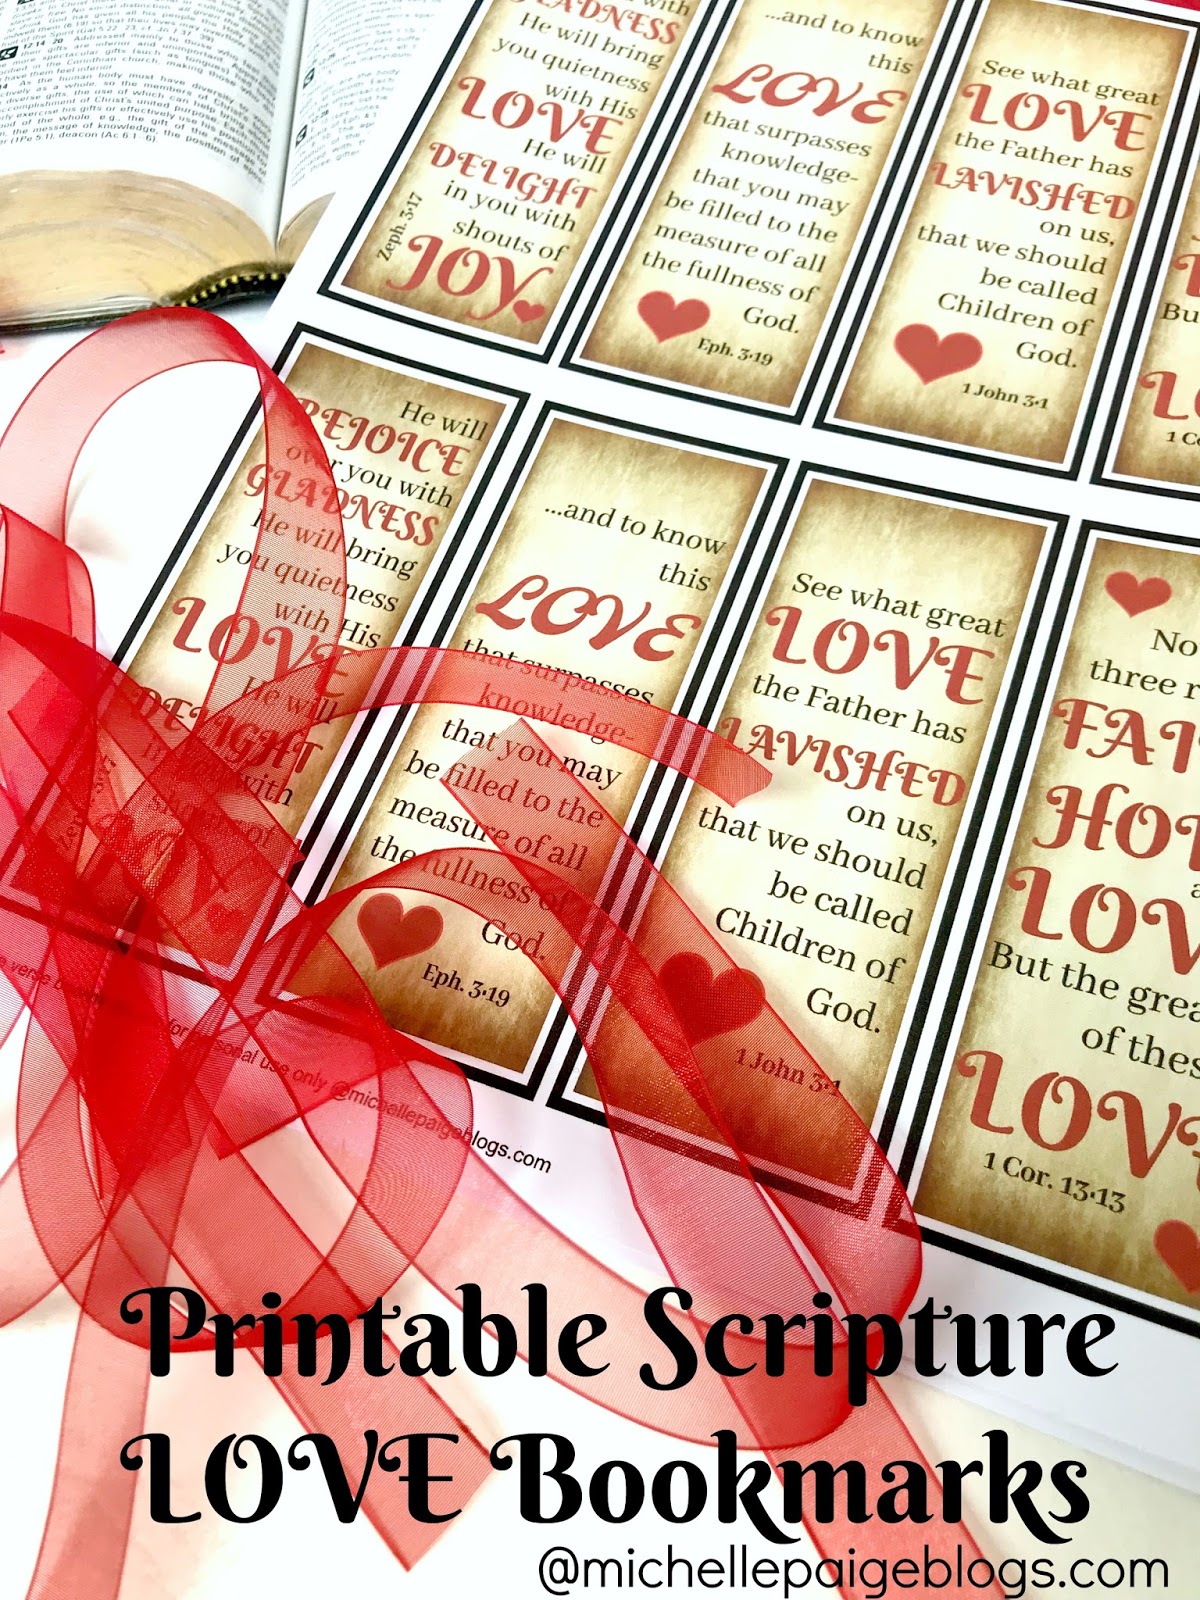 michelle-paige-blogs-printable-scripture-verses-for-valentine-s-day